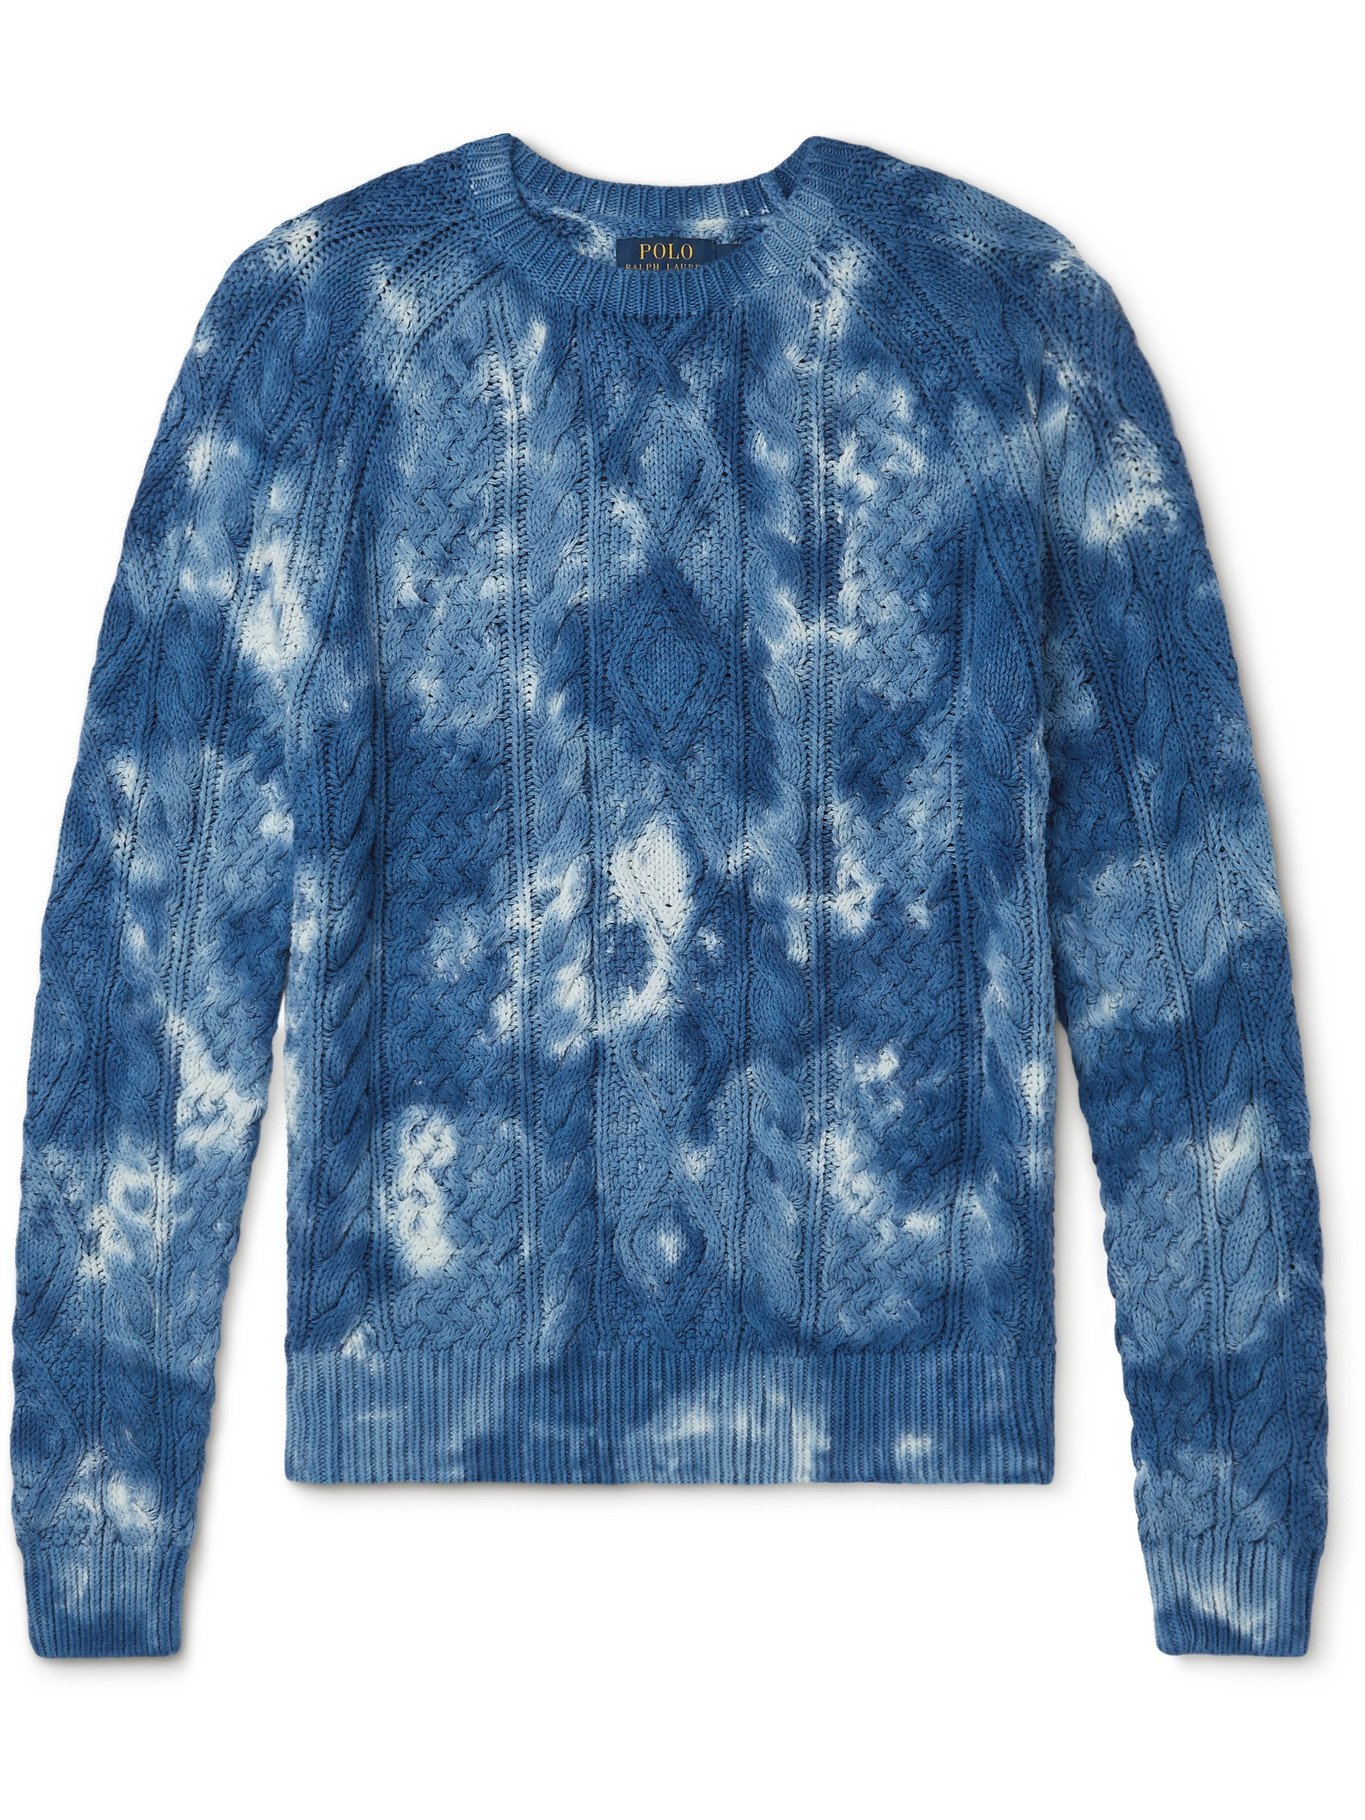 POLO RALPH LAUREN - Tie-Dyed Cable-Knit Cotton Sweater - Blue Polo Ralph  Lauren